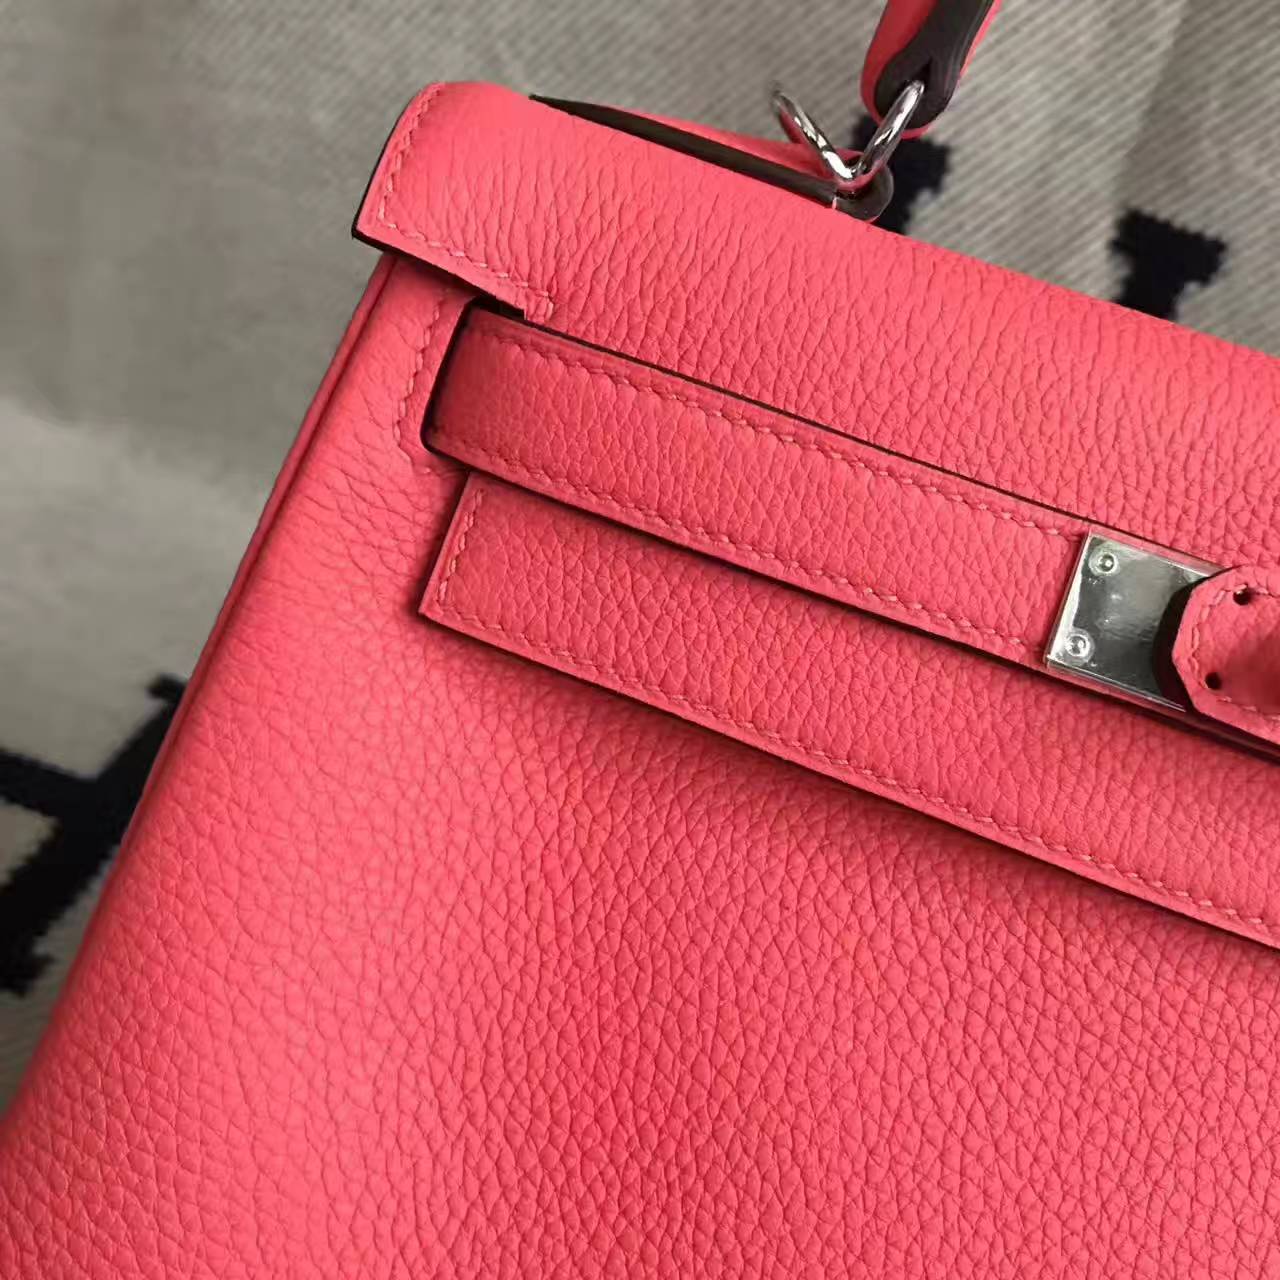 Wholesale Hermes Kelly28cm Handbag in T5 Peach Pink Togo Leather